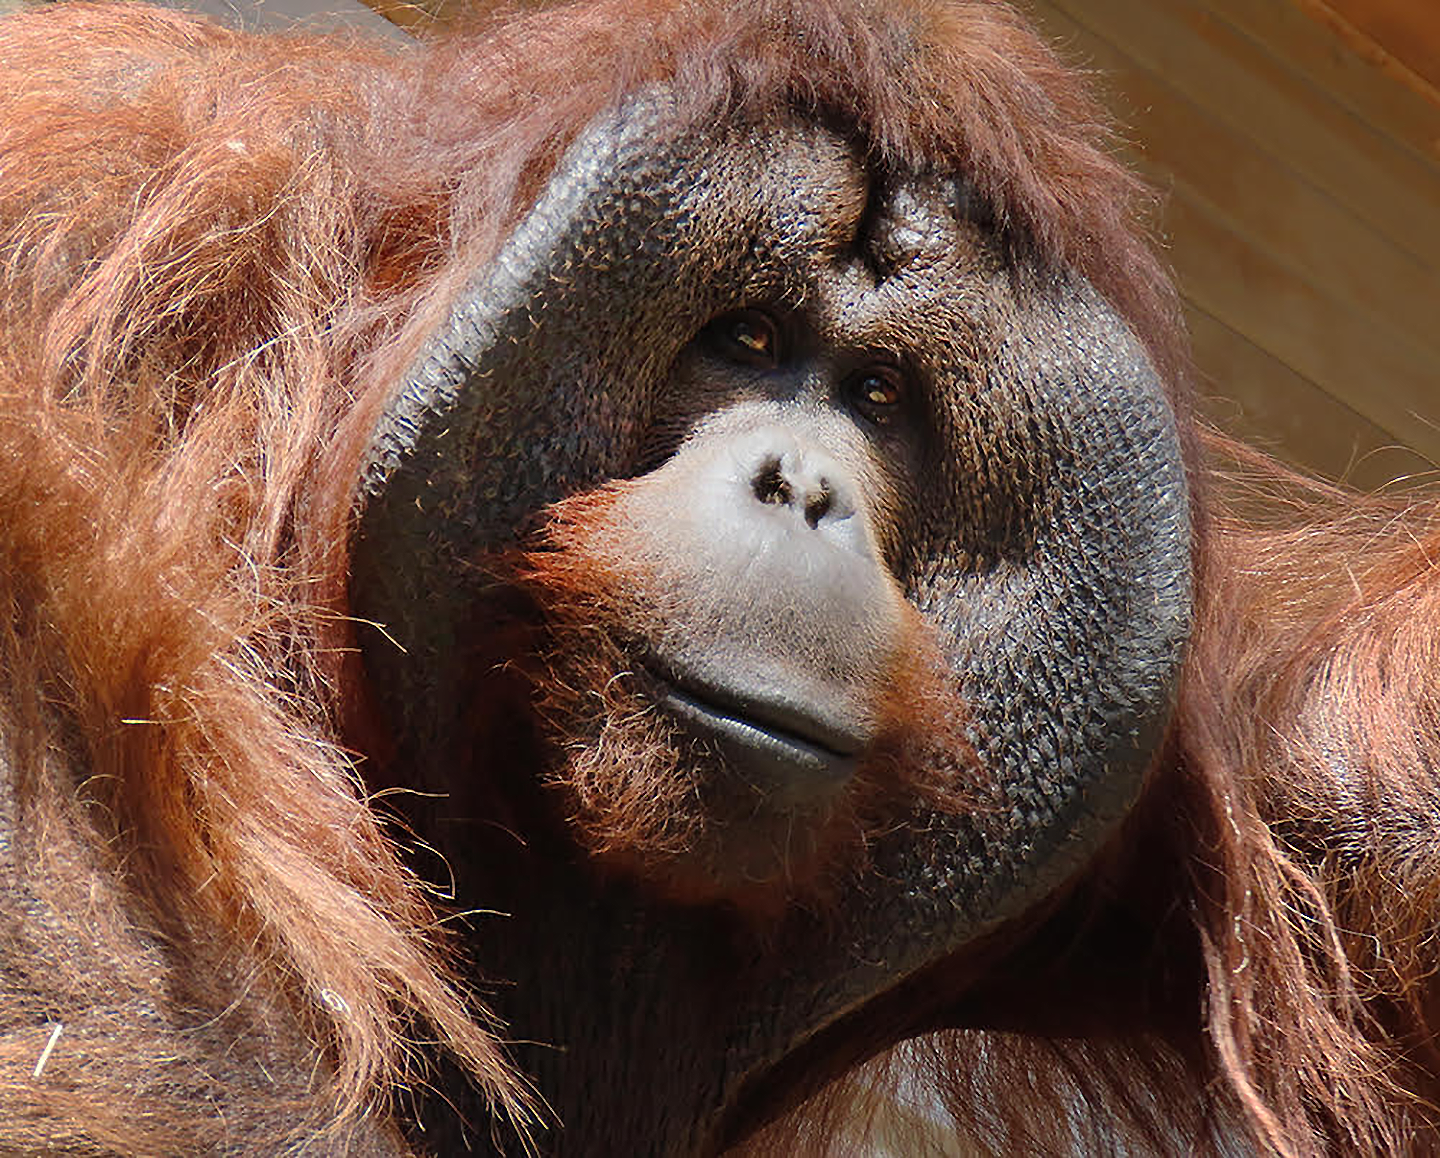 Orangutan Tujoy up-close portrait at Cheyenne Mountain Zoo